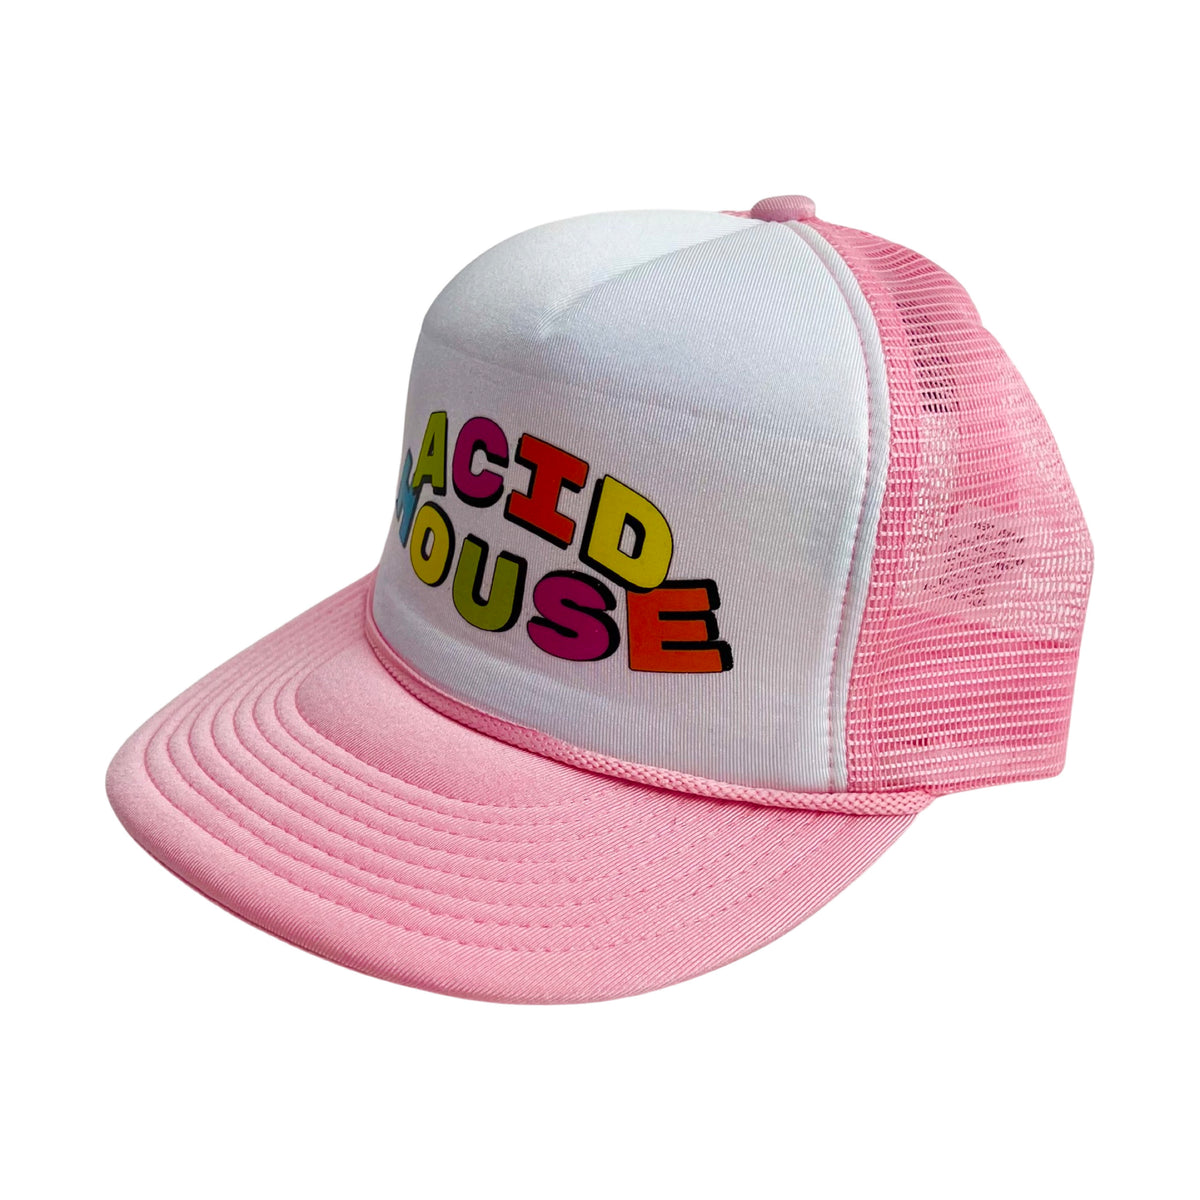 Acid House Trucker Hat